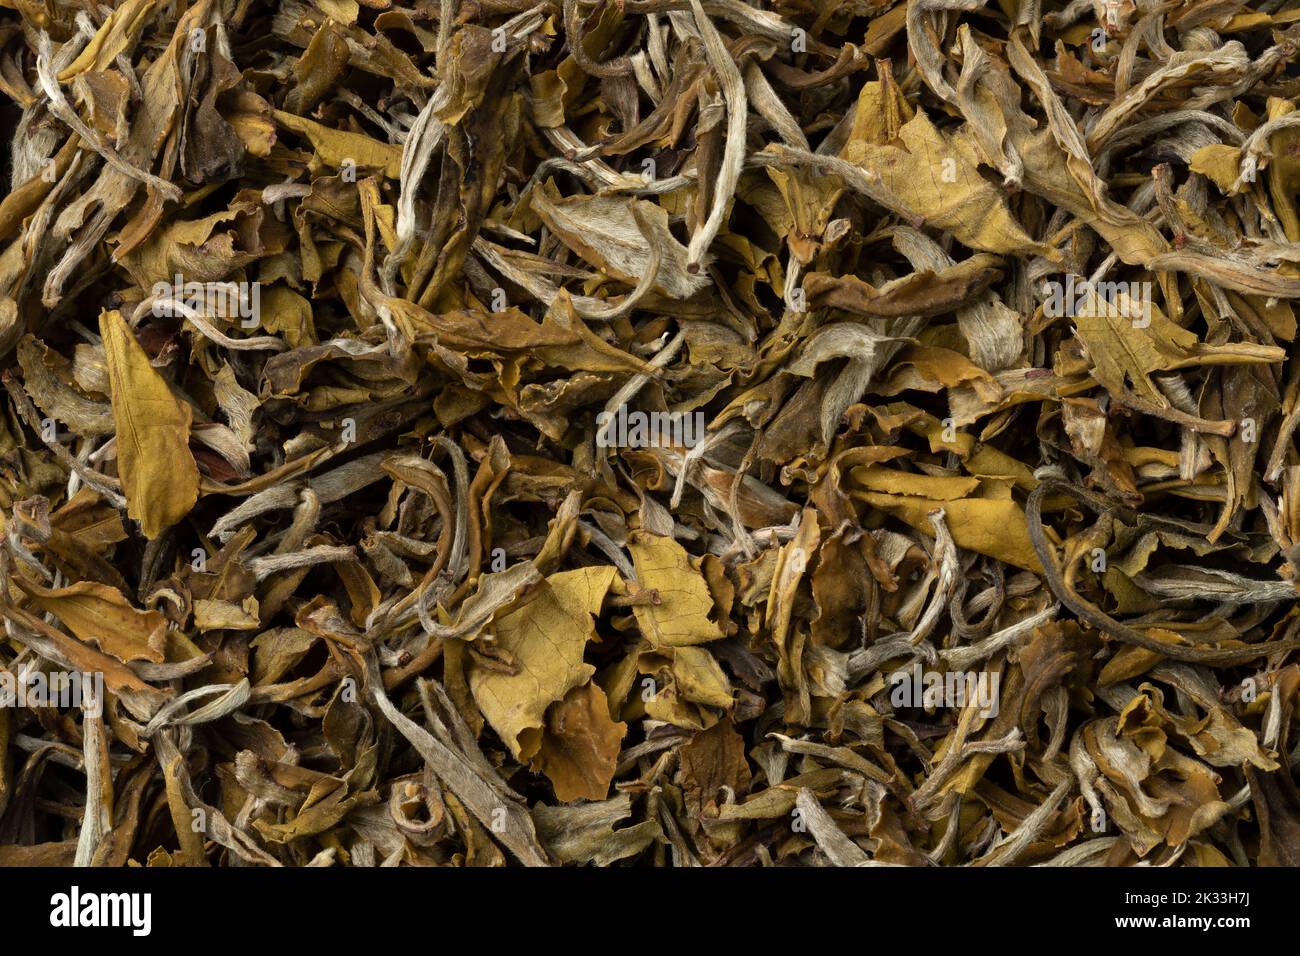 Brotes de nieve chinos secos hojas de té primer plano cuadro completo como fondo Foto de stock